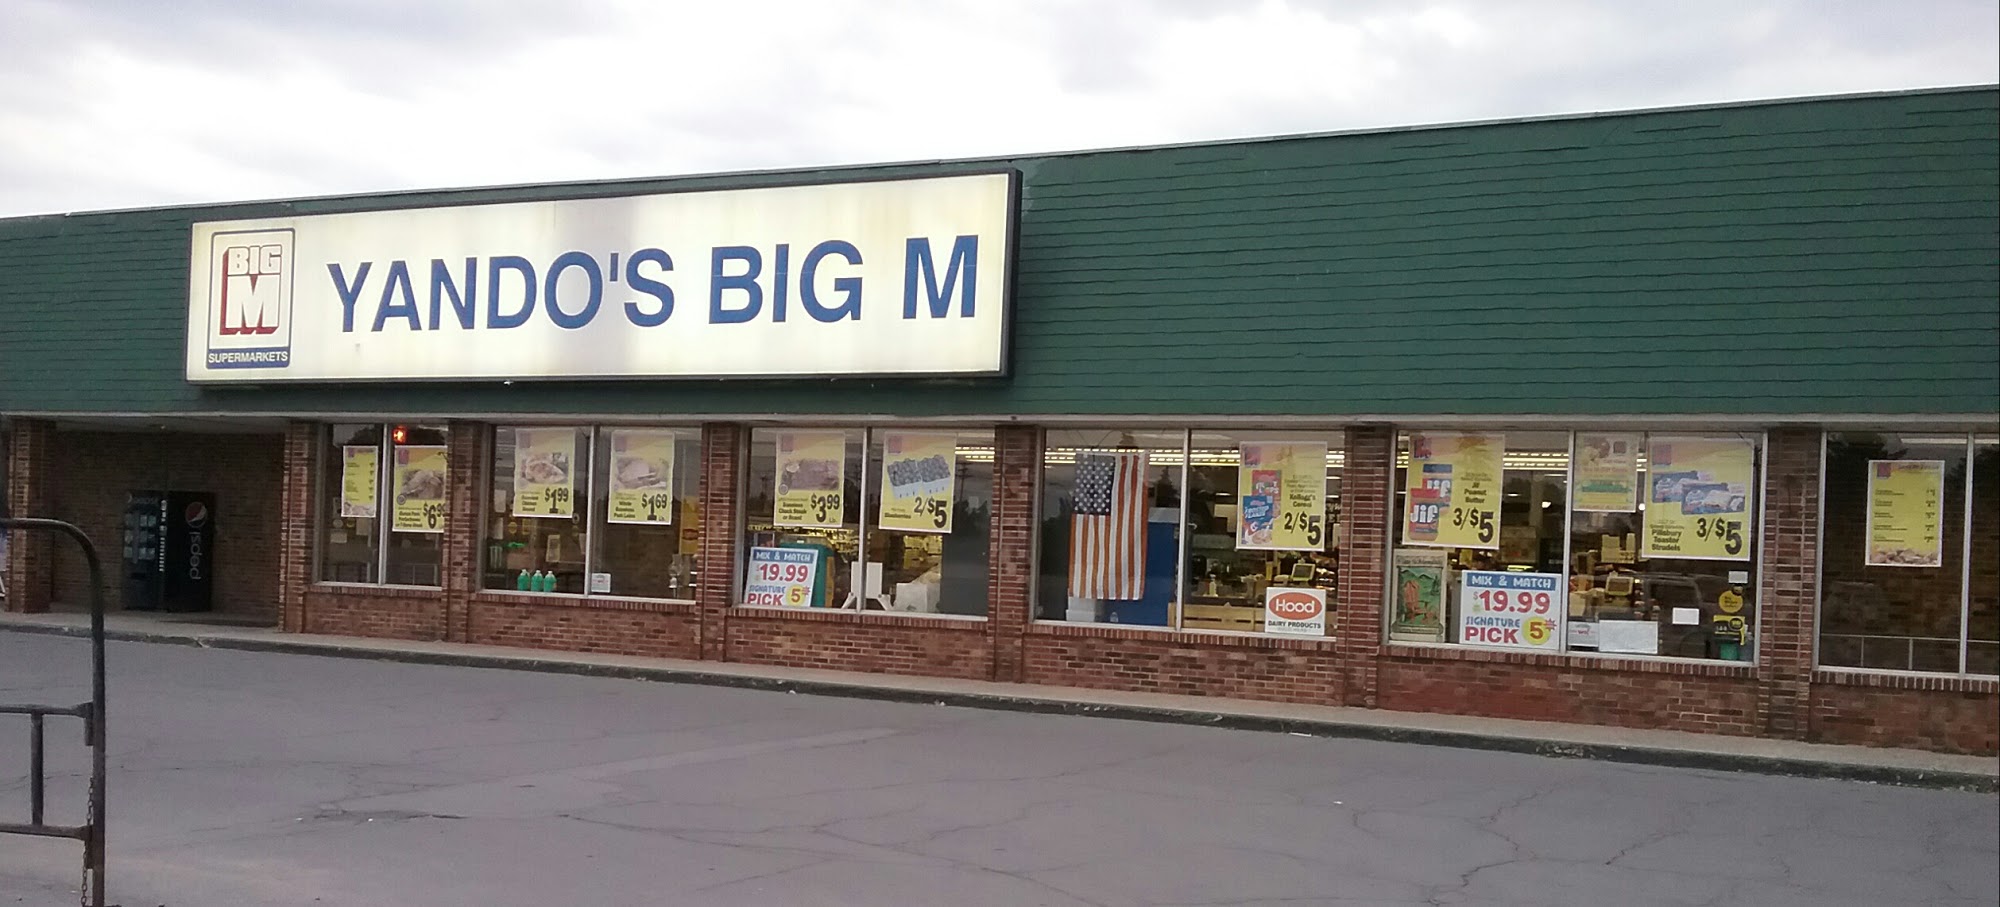 Yando's Big M Supermarket